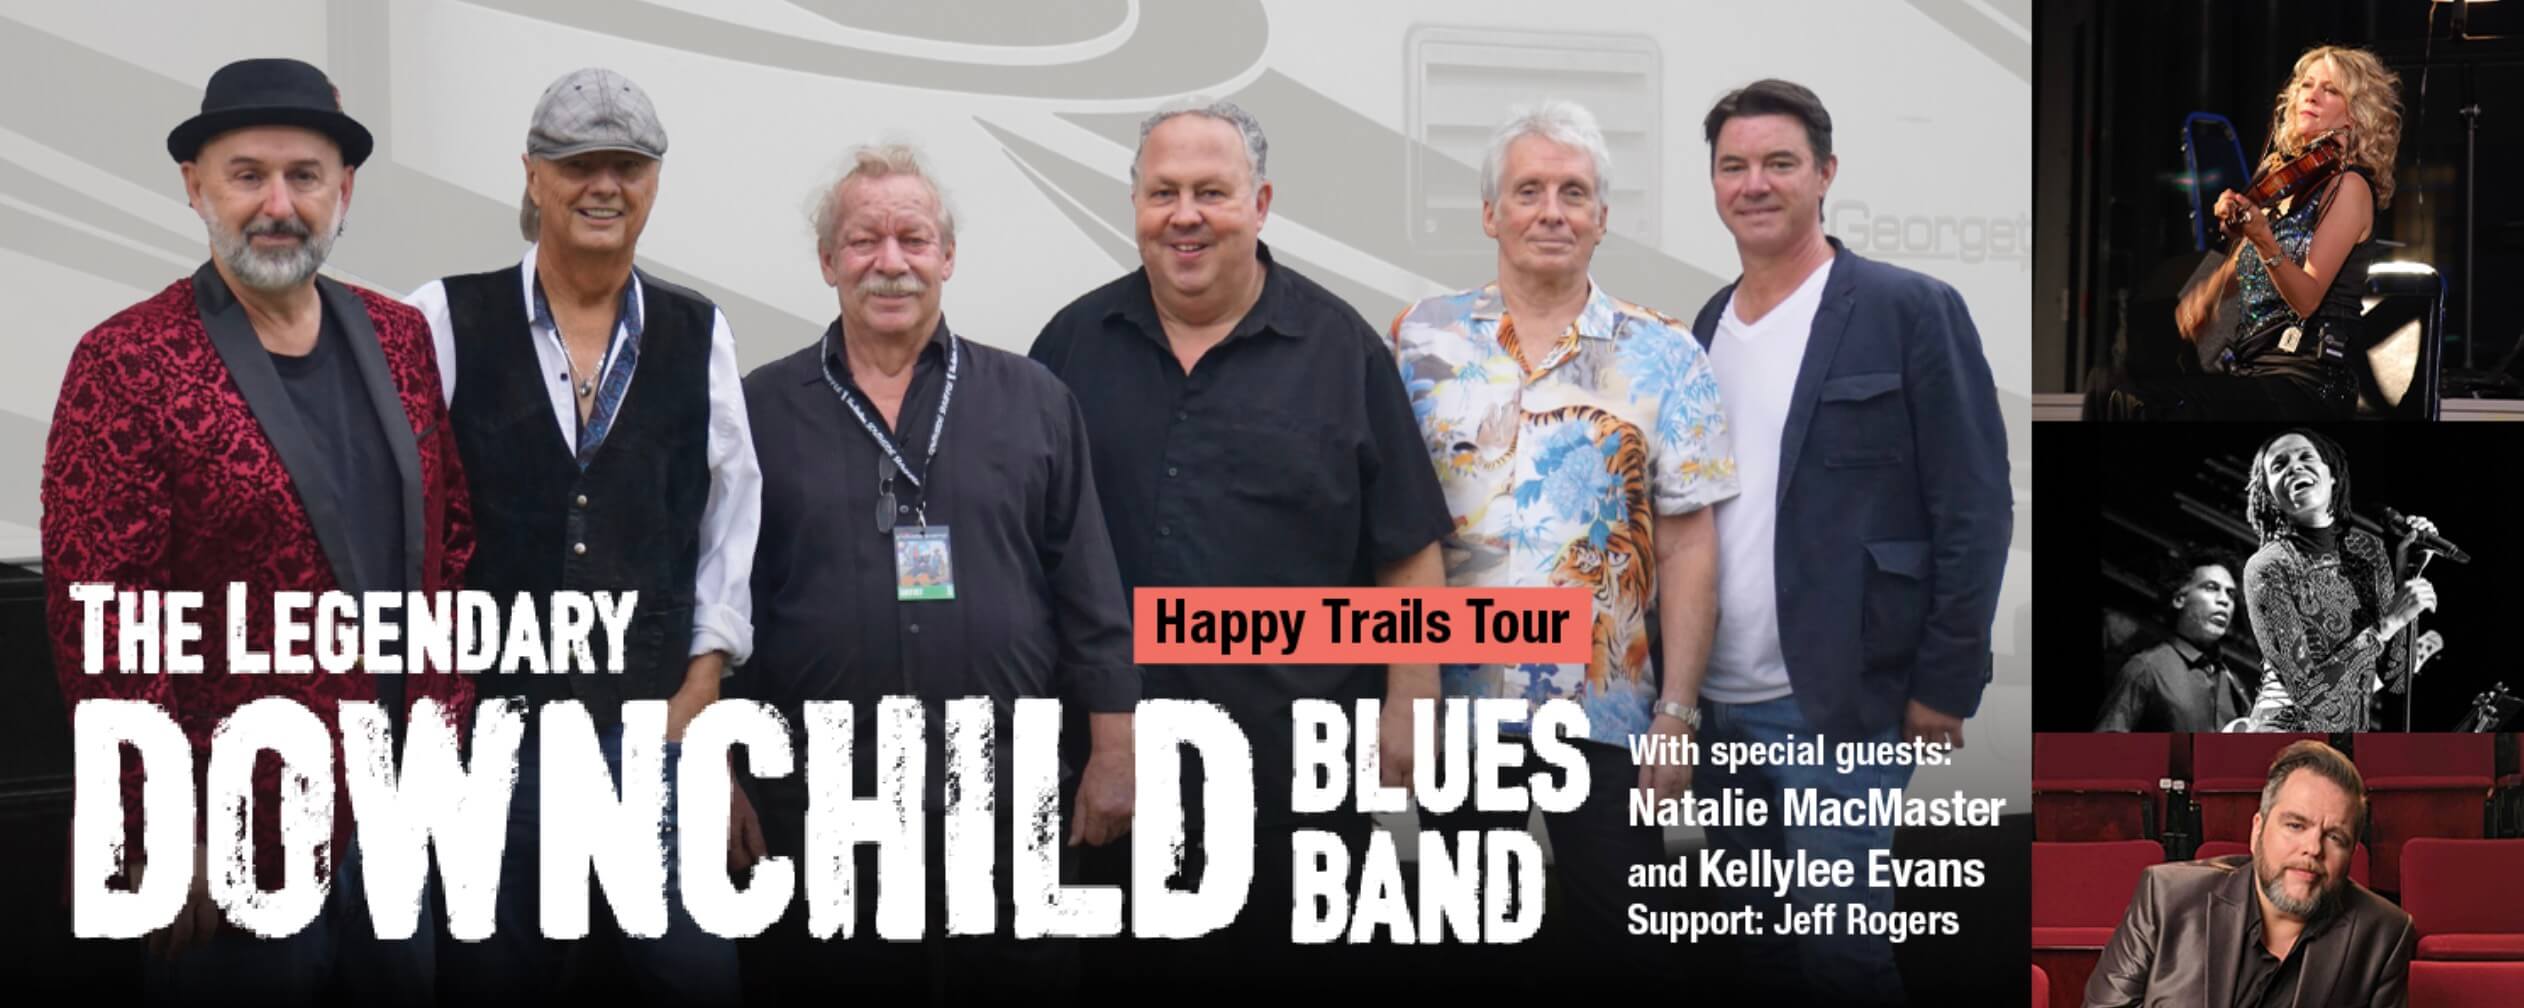 The Legendary Downchild Blues Band with Natalie MacMaster - Kingston ...